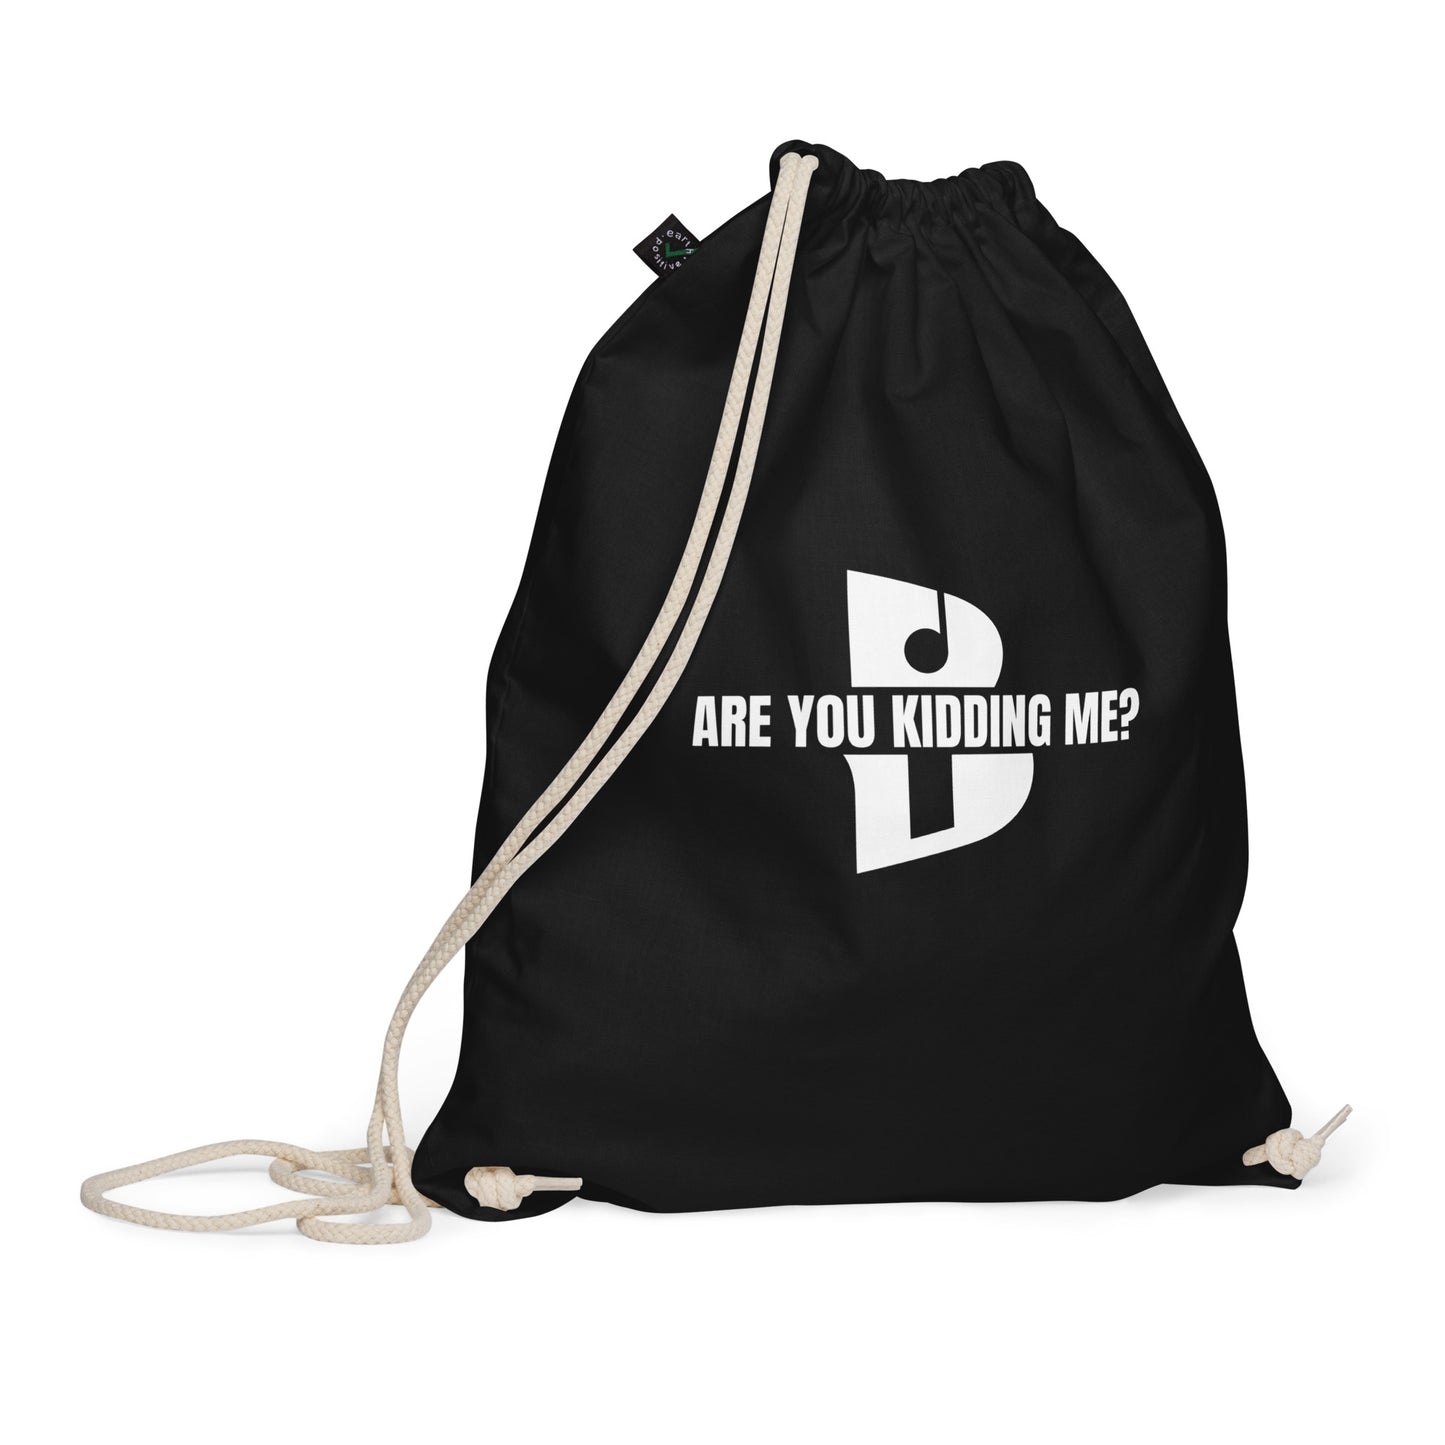 “Are You Kidding Me?” Organic cotton drawstring bag